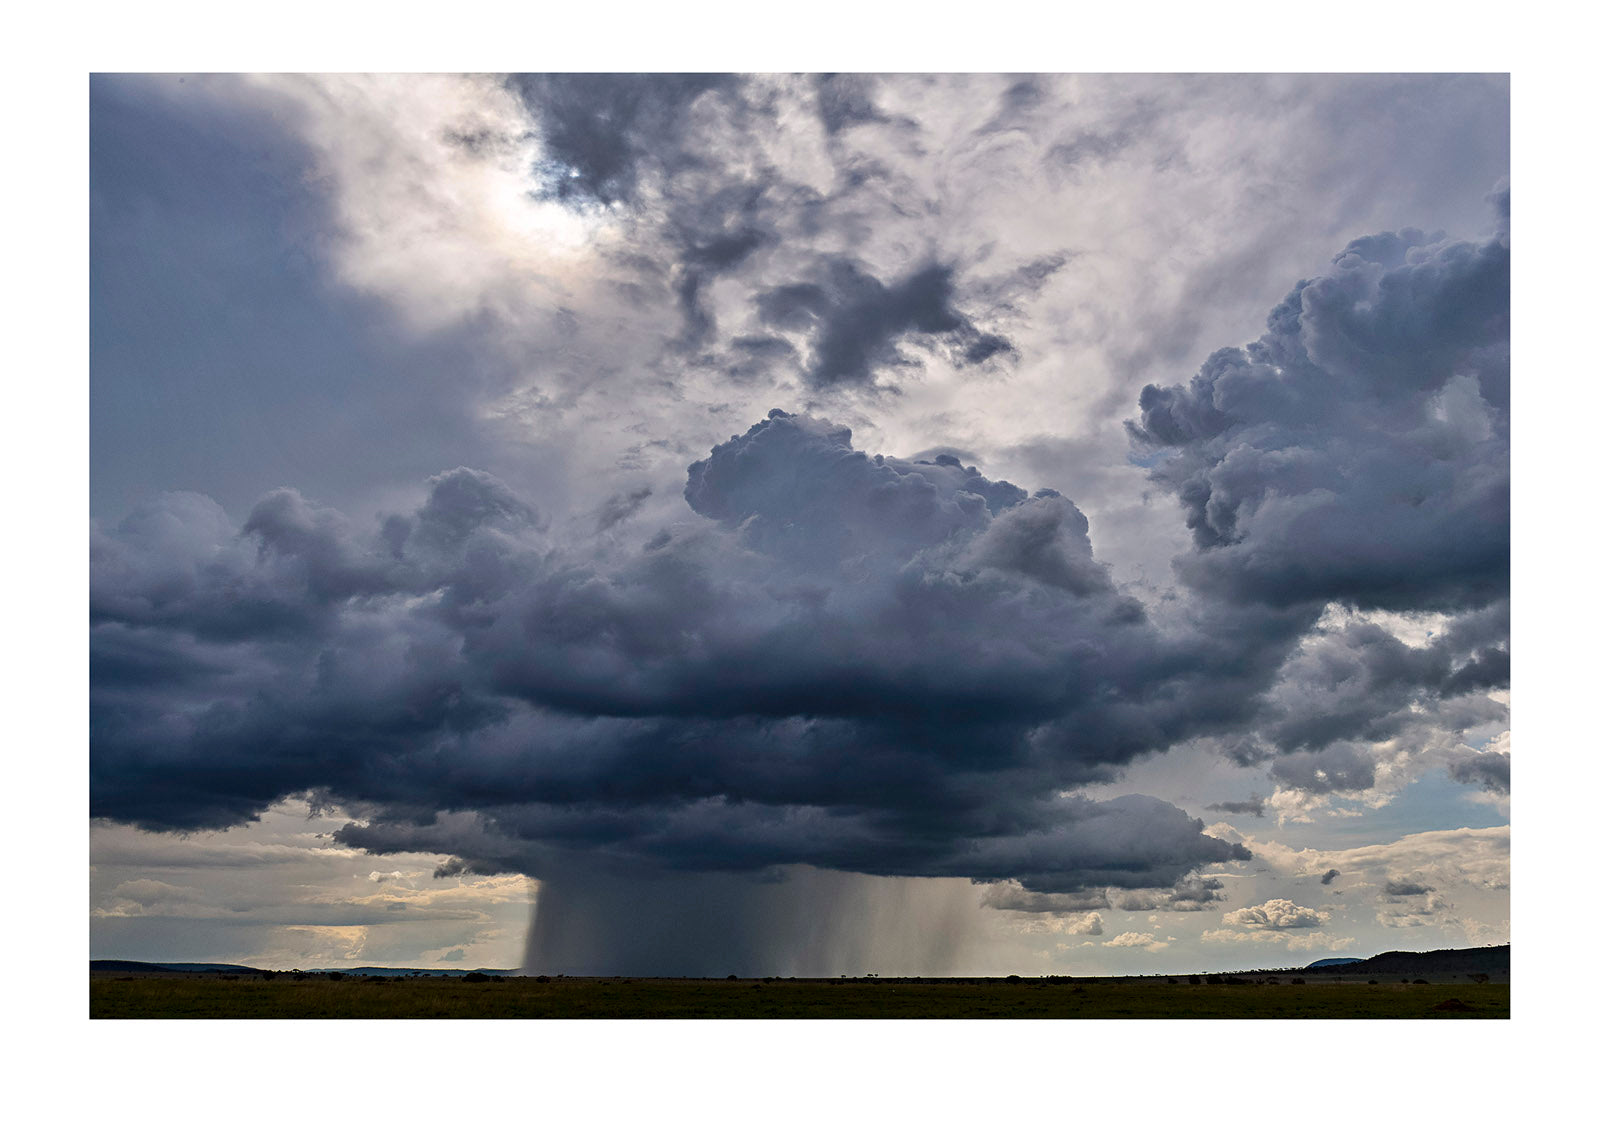 An enormous thunderhead delivers a deluge of rain over the vast savannah of the Serengeti. Serengeti National Park, Tanzania.